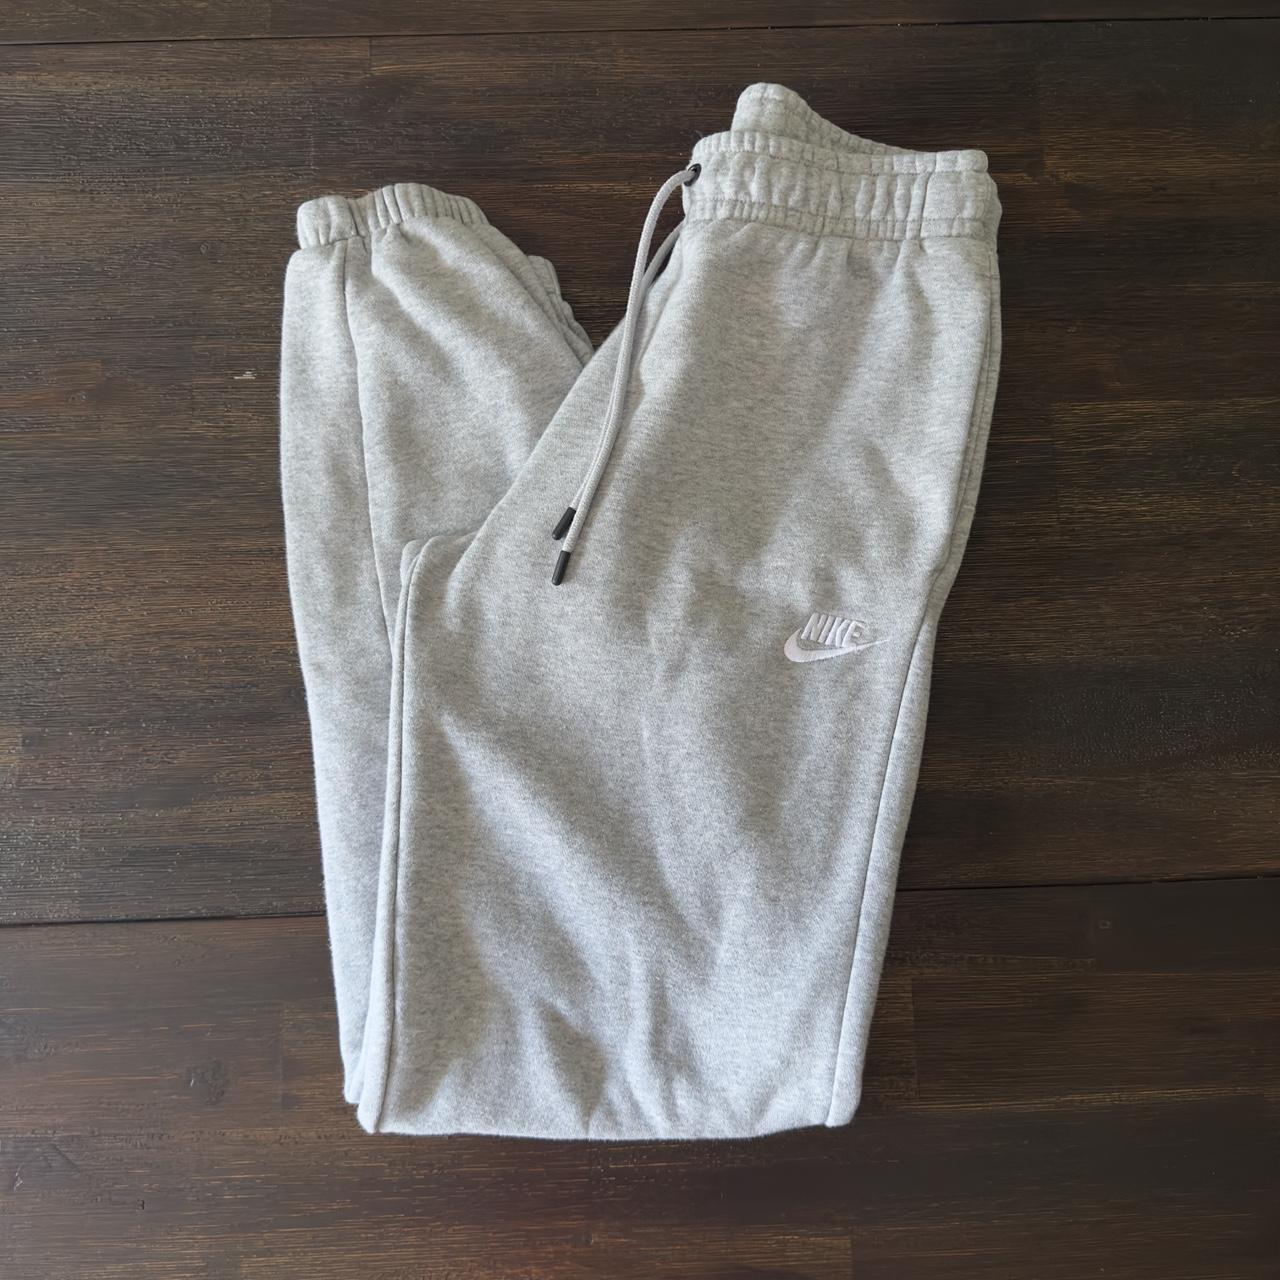 Grey Nike Sweatpants Women’s Size - Xs Worn a few... - Depop